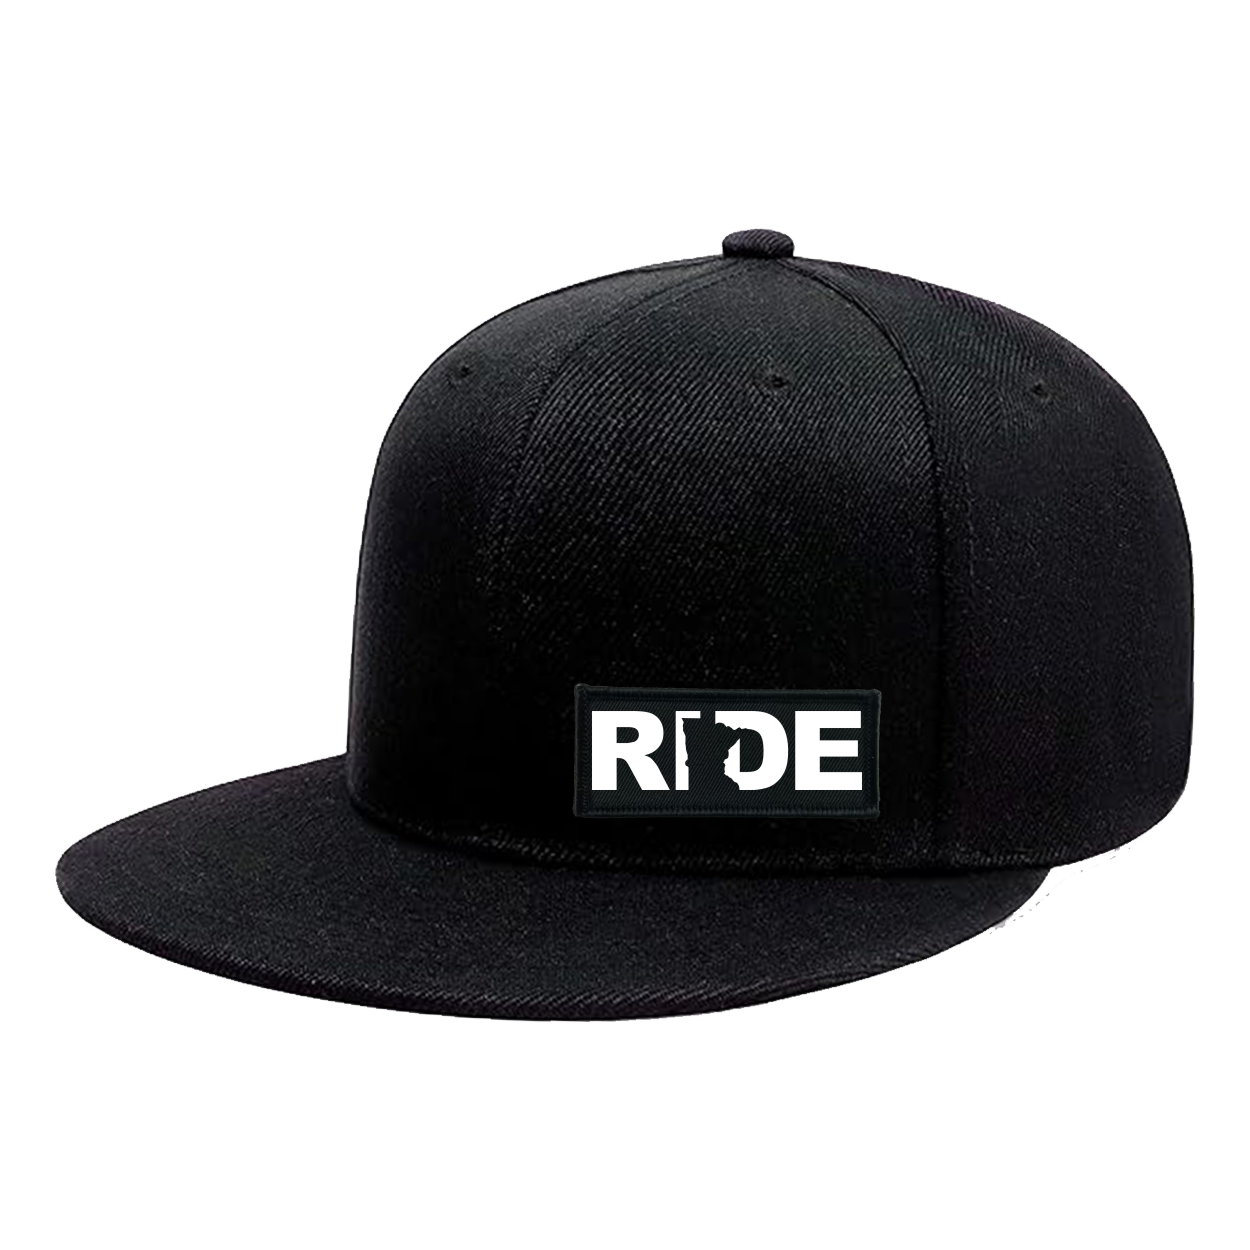 Ride Minnesota Night Out Woven Patch Snapback Flat Brim Hat Black